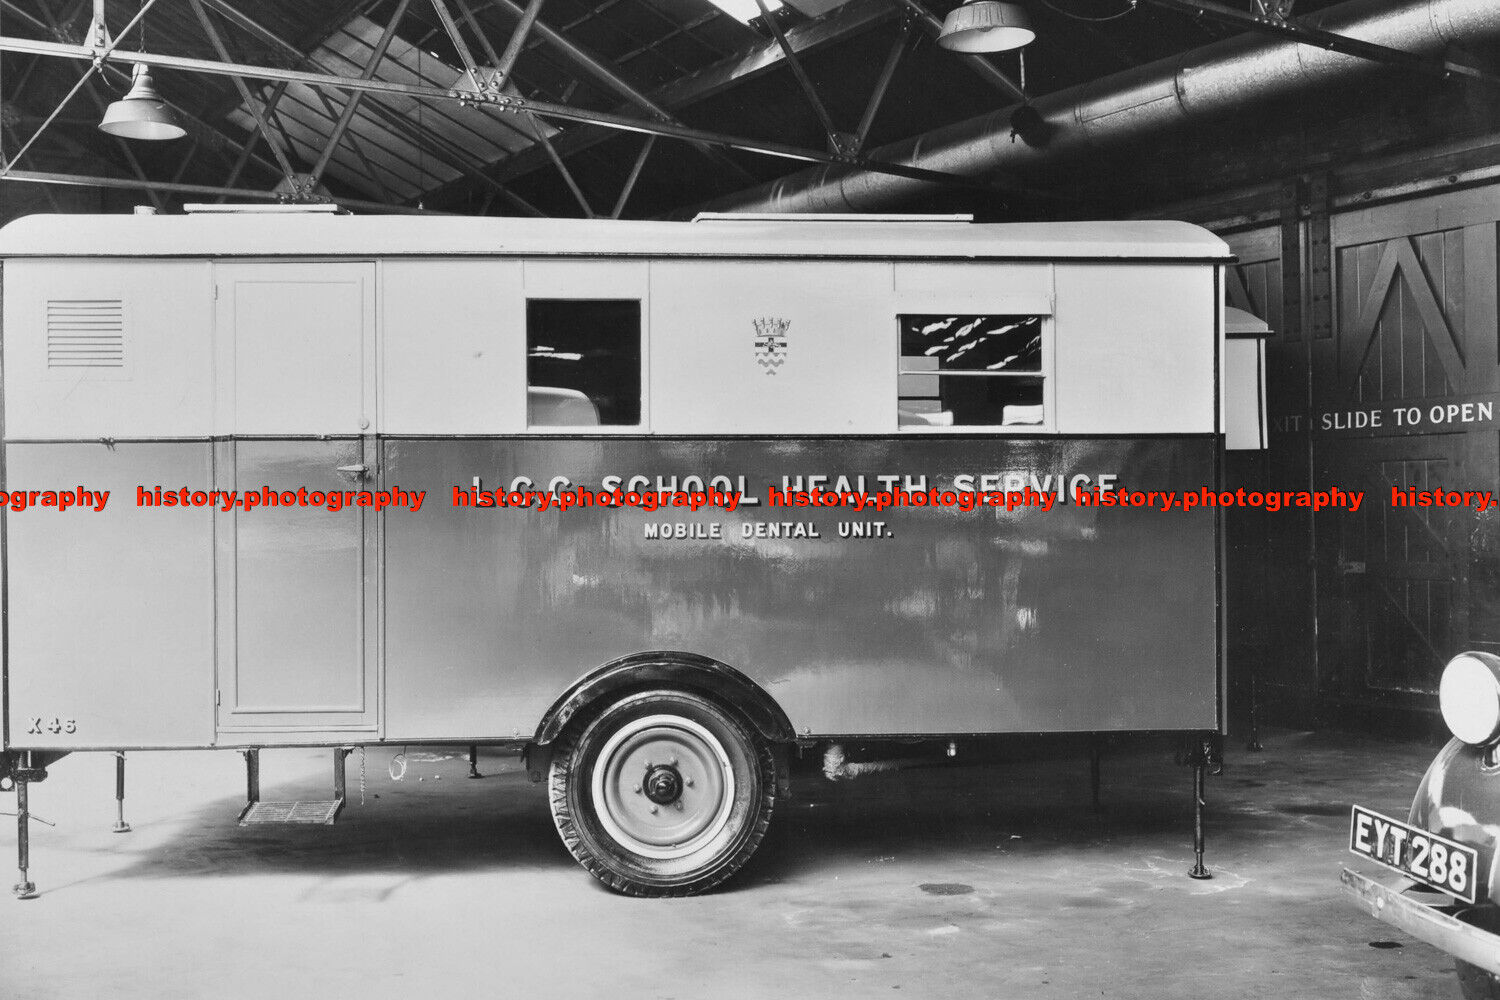 F000044 Mobile dental unit. 1947